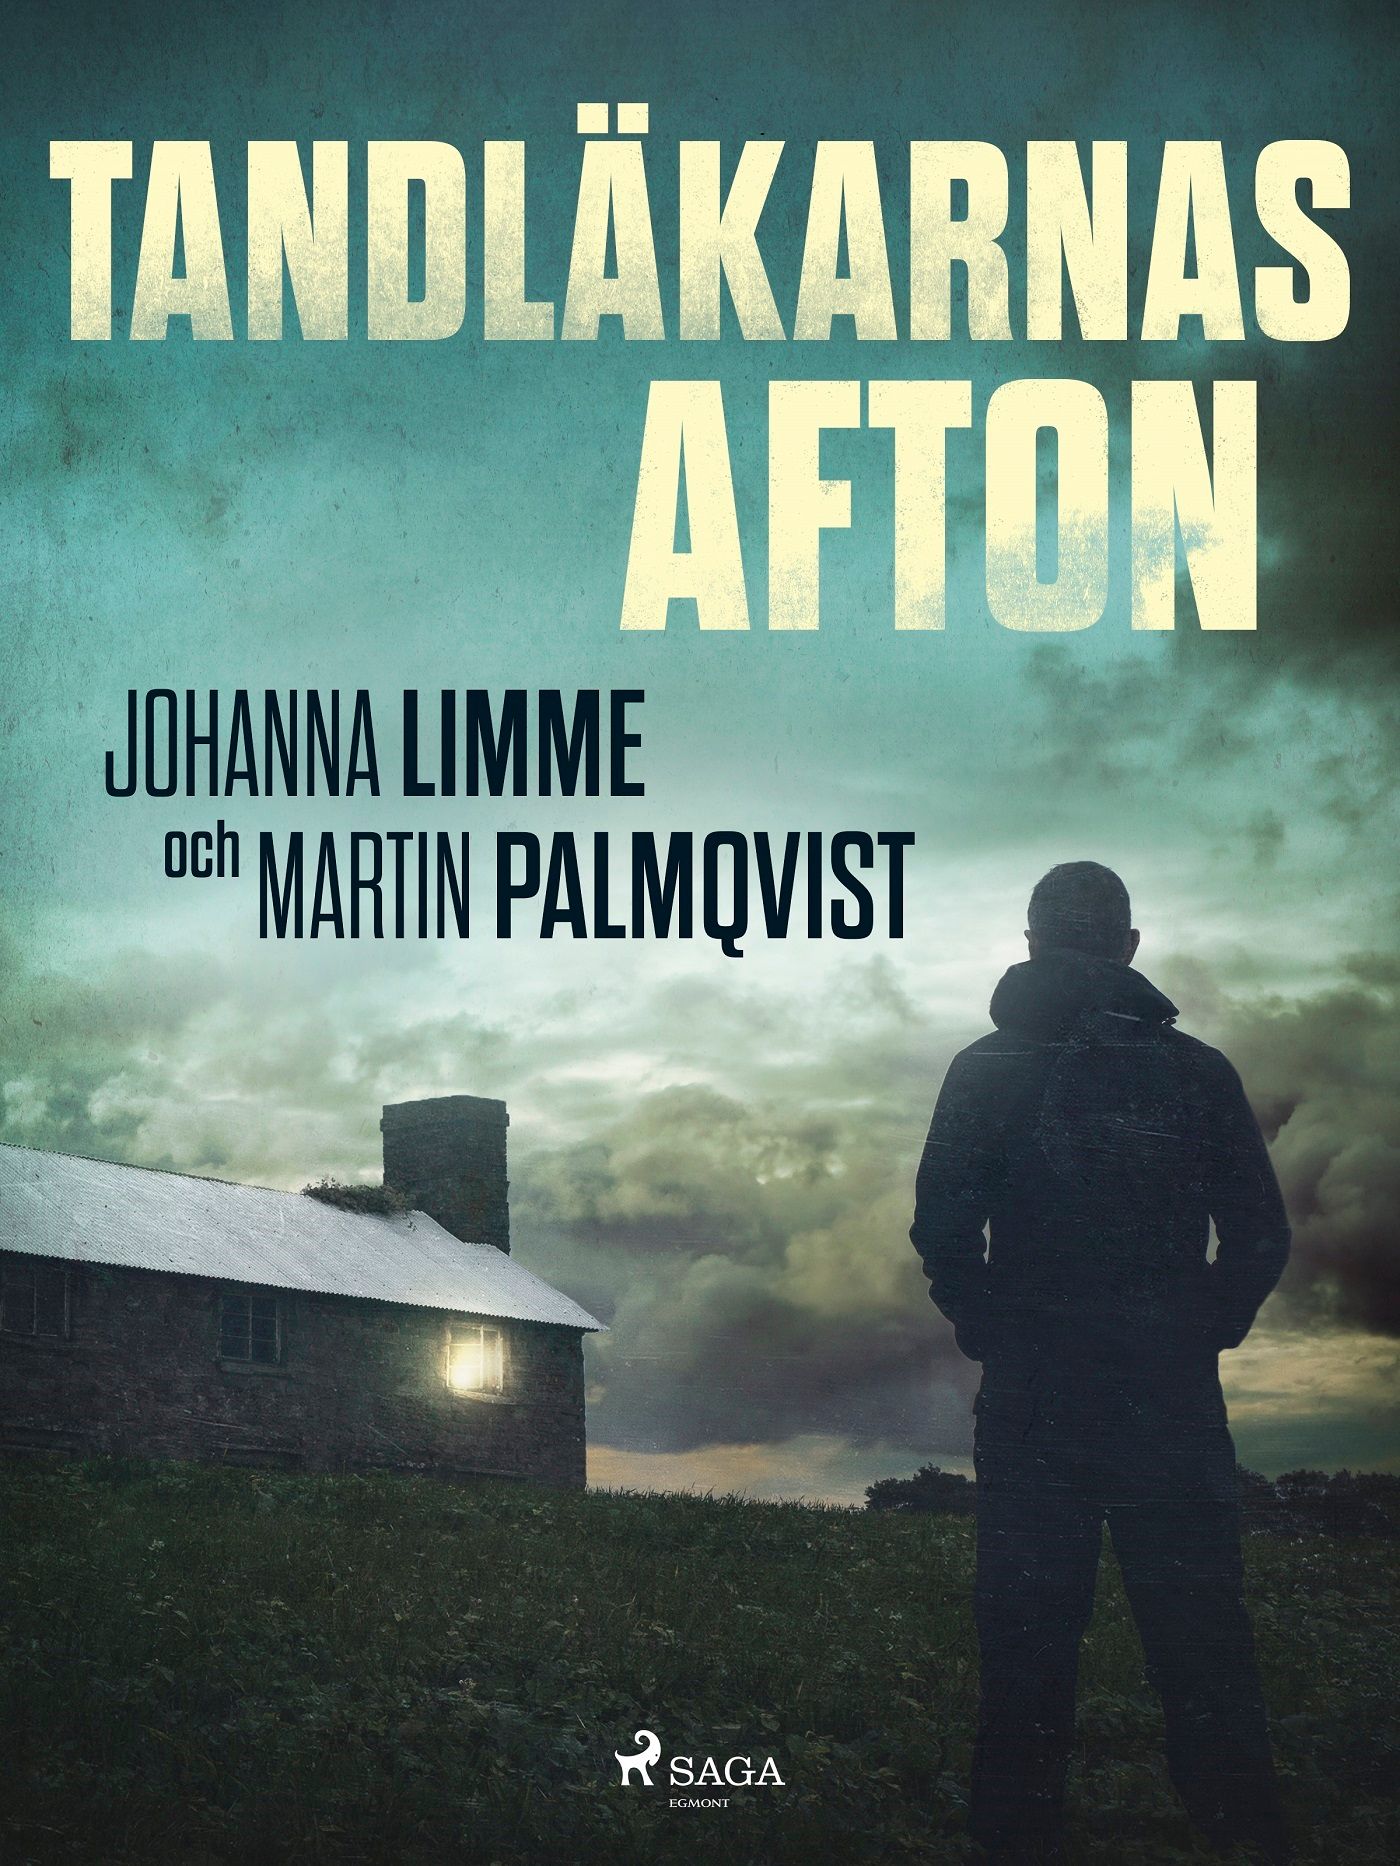 Tandläkarnas afton, eBook by Johanna Limme, Martin Palmqvist